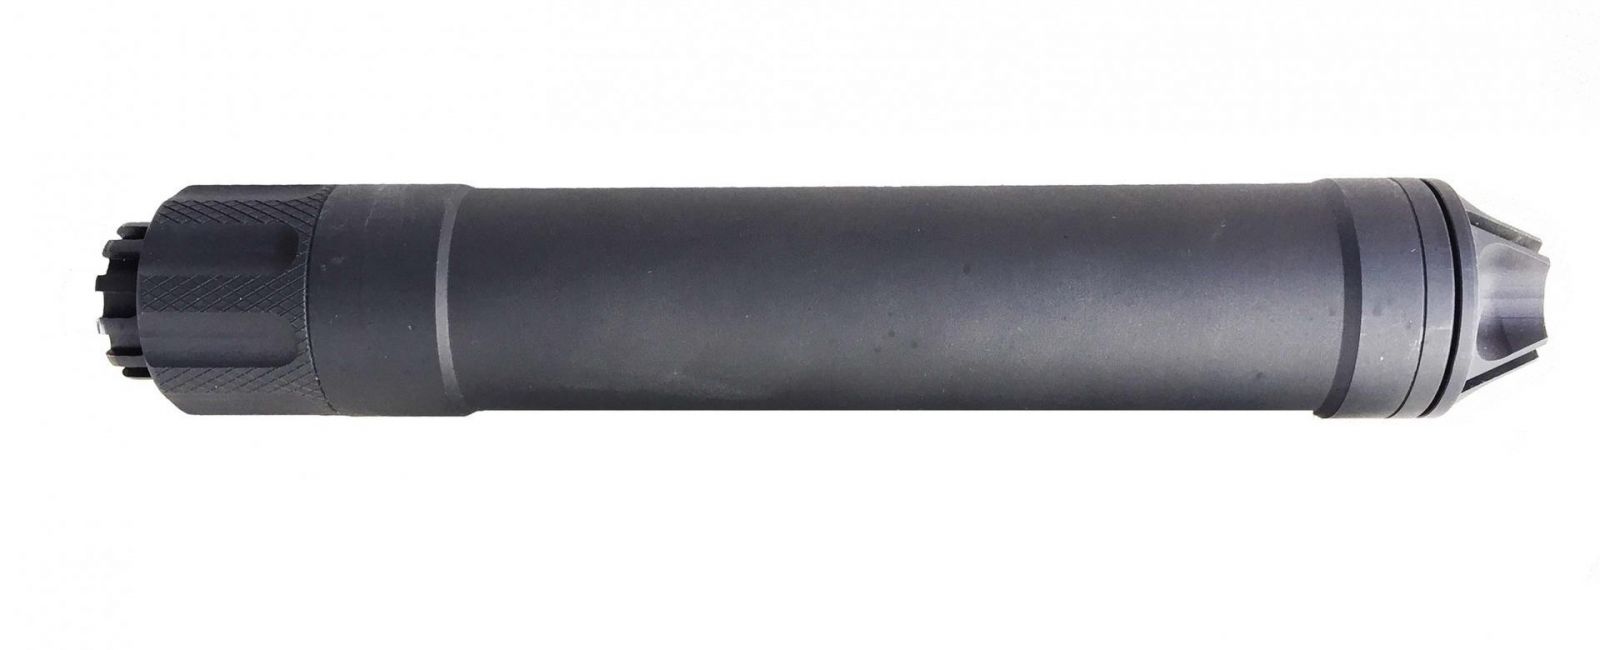 Tlumič G.I.S. CSR9 - ráže 9 x 19 mm, ocelový, 1/2x28